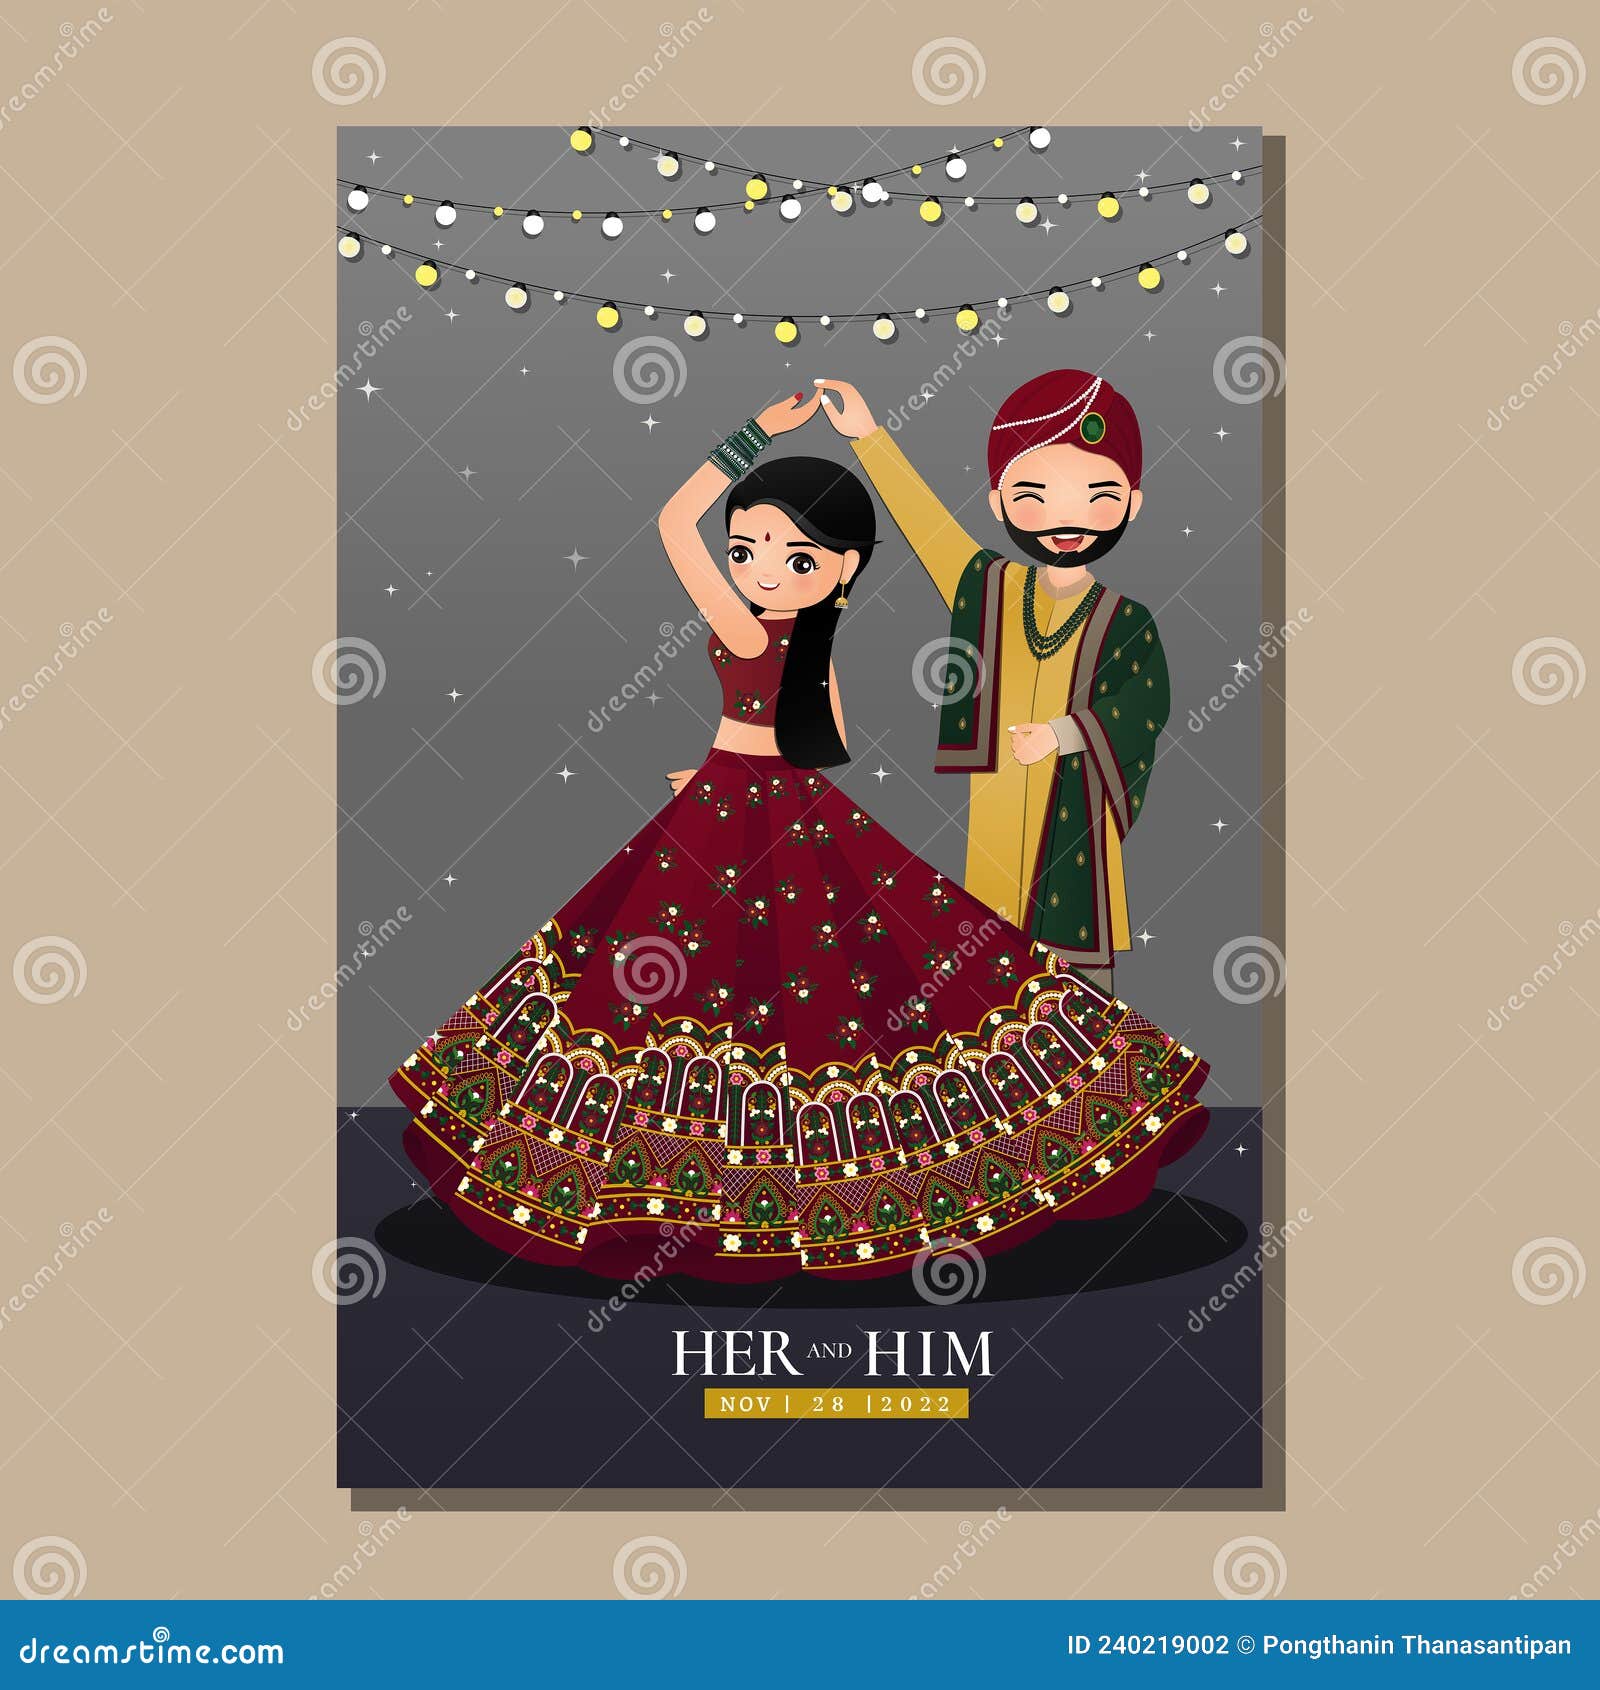 Cute Couple in Traditional Indian Dress Cartoon  Wedding  Invitation Card Stock Vector - Illustration of card, sari: 240219002